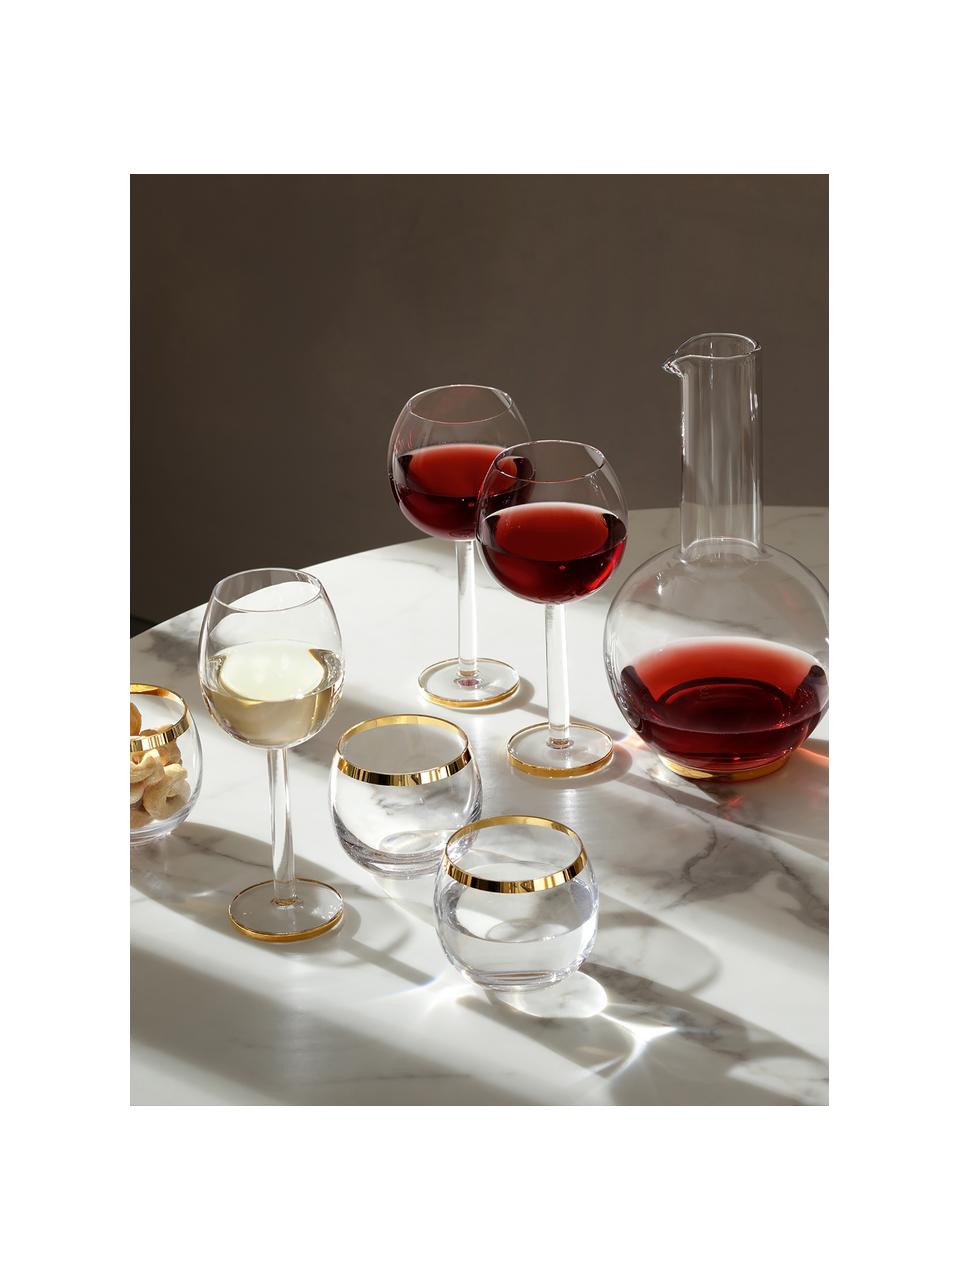 Mundgeblasene Weingläser Luca, 2 Stück, Glas, Transparent mit Goldrand, Ø 9 x H 19 cm, 320 ml